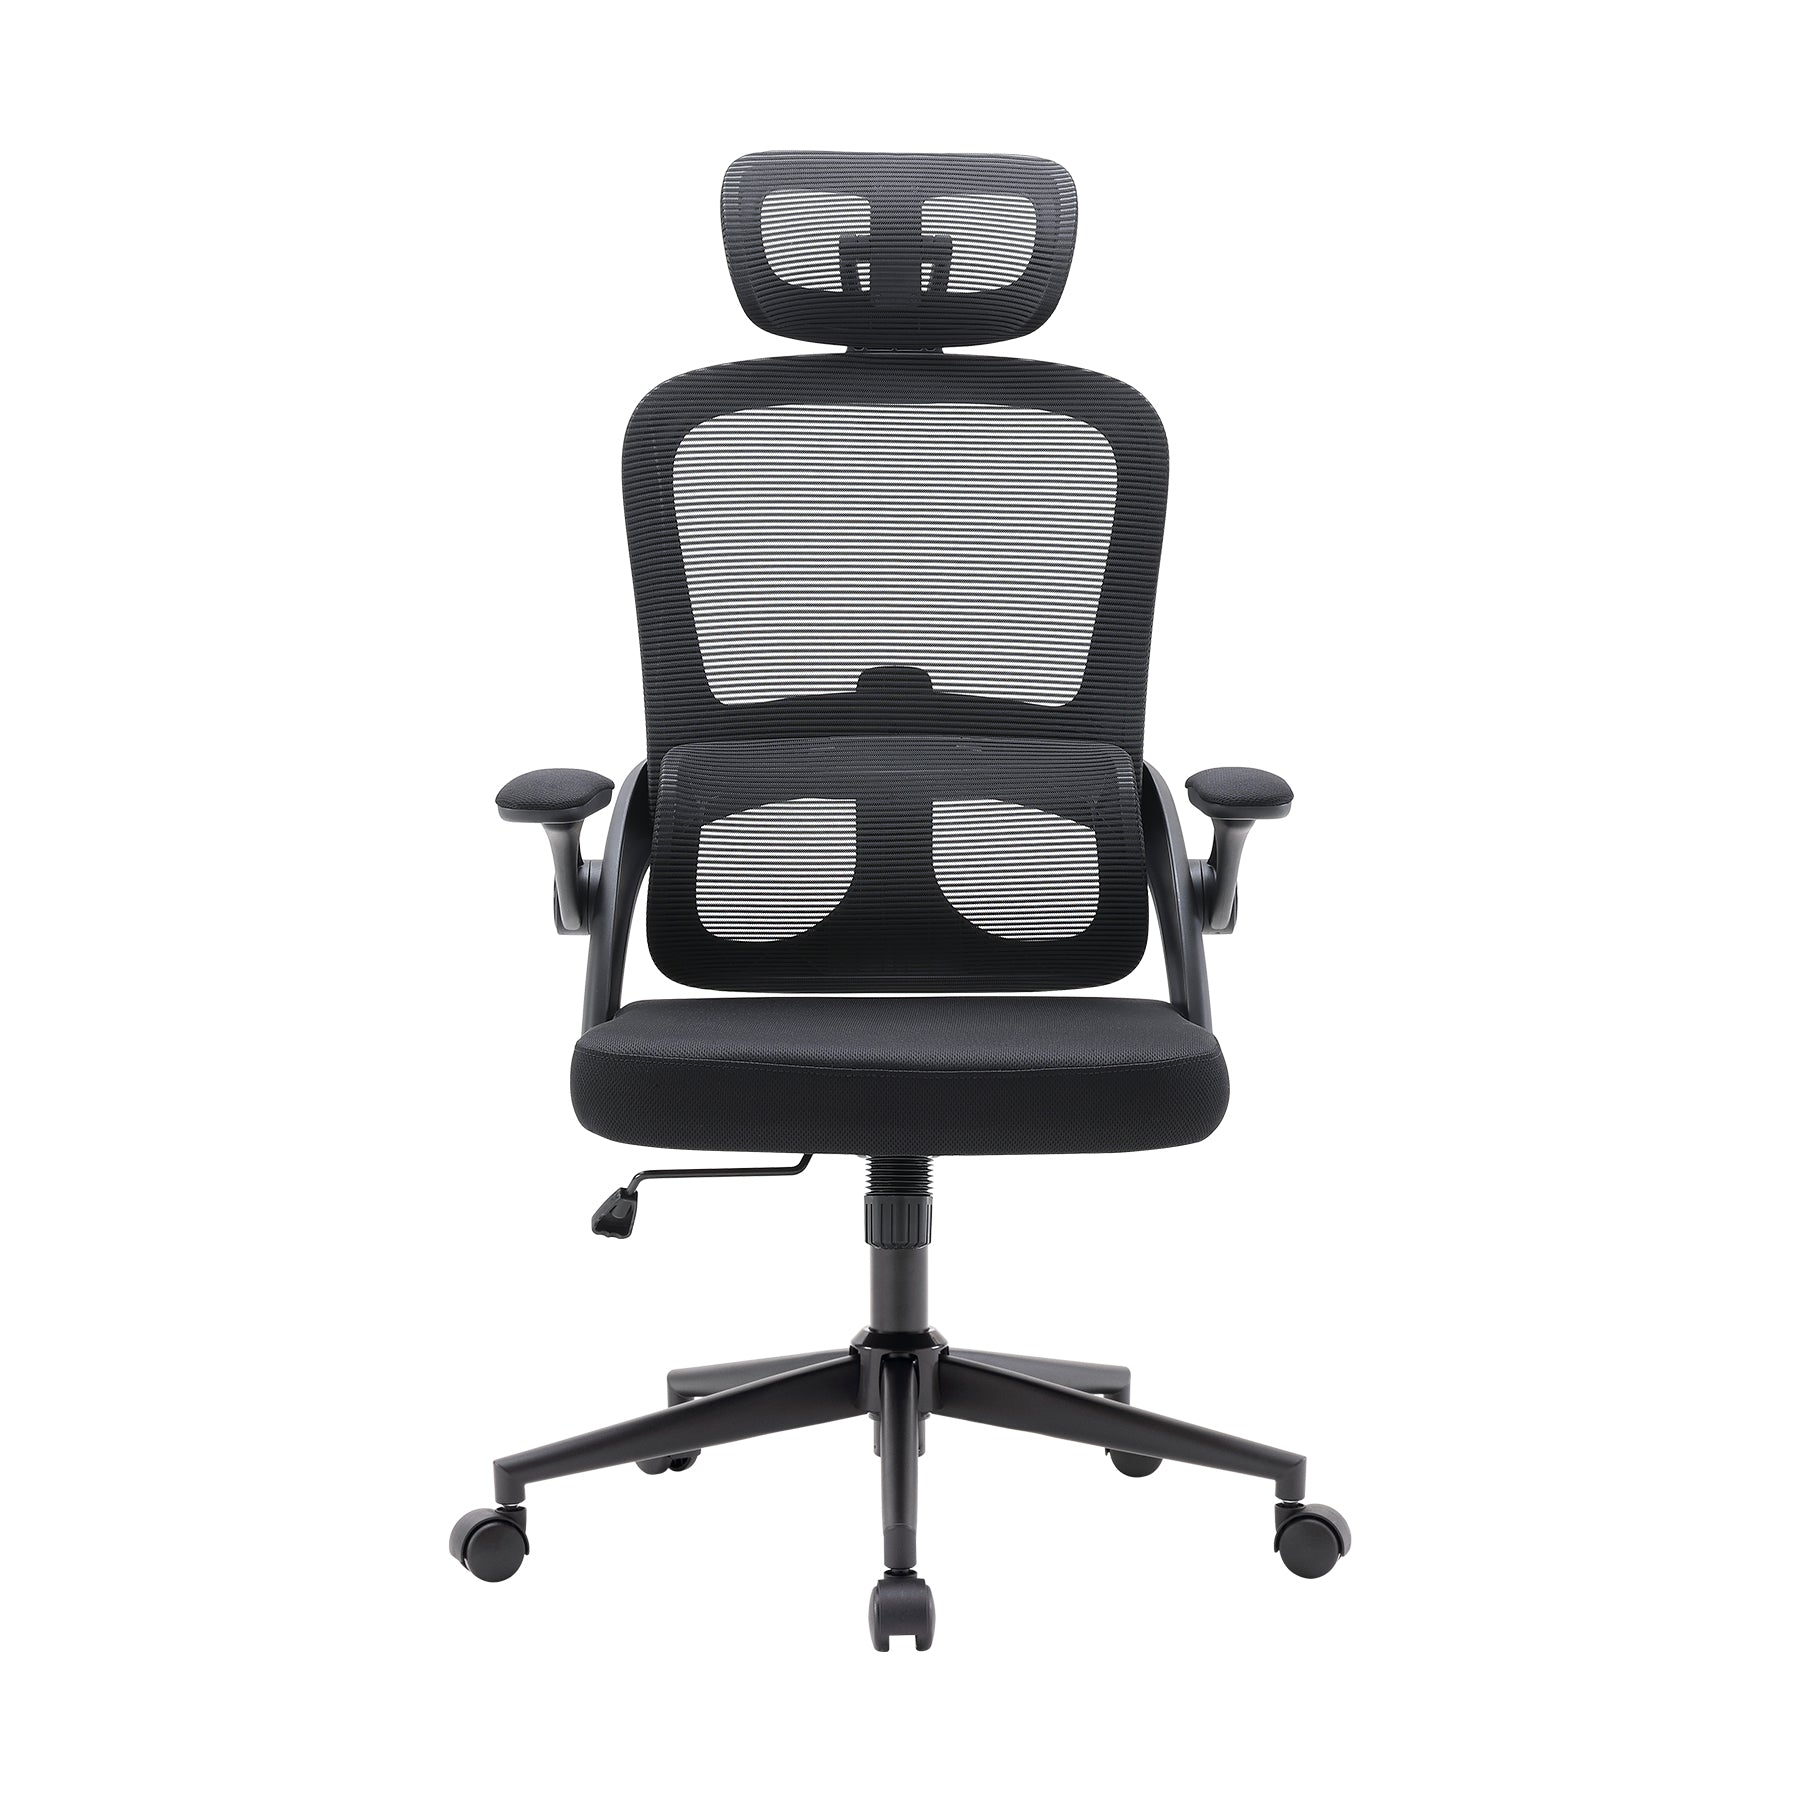 Sihoo M102C Ergonomic Office Chair with Customizable Lumbar Support